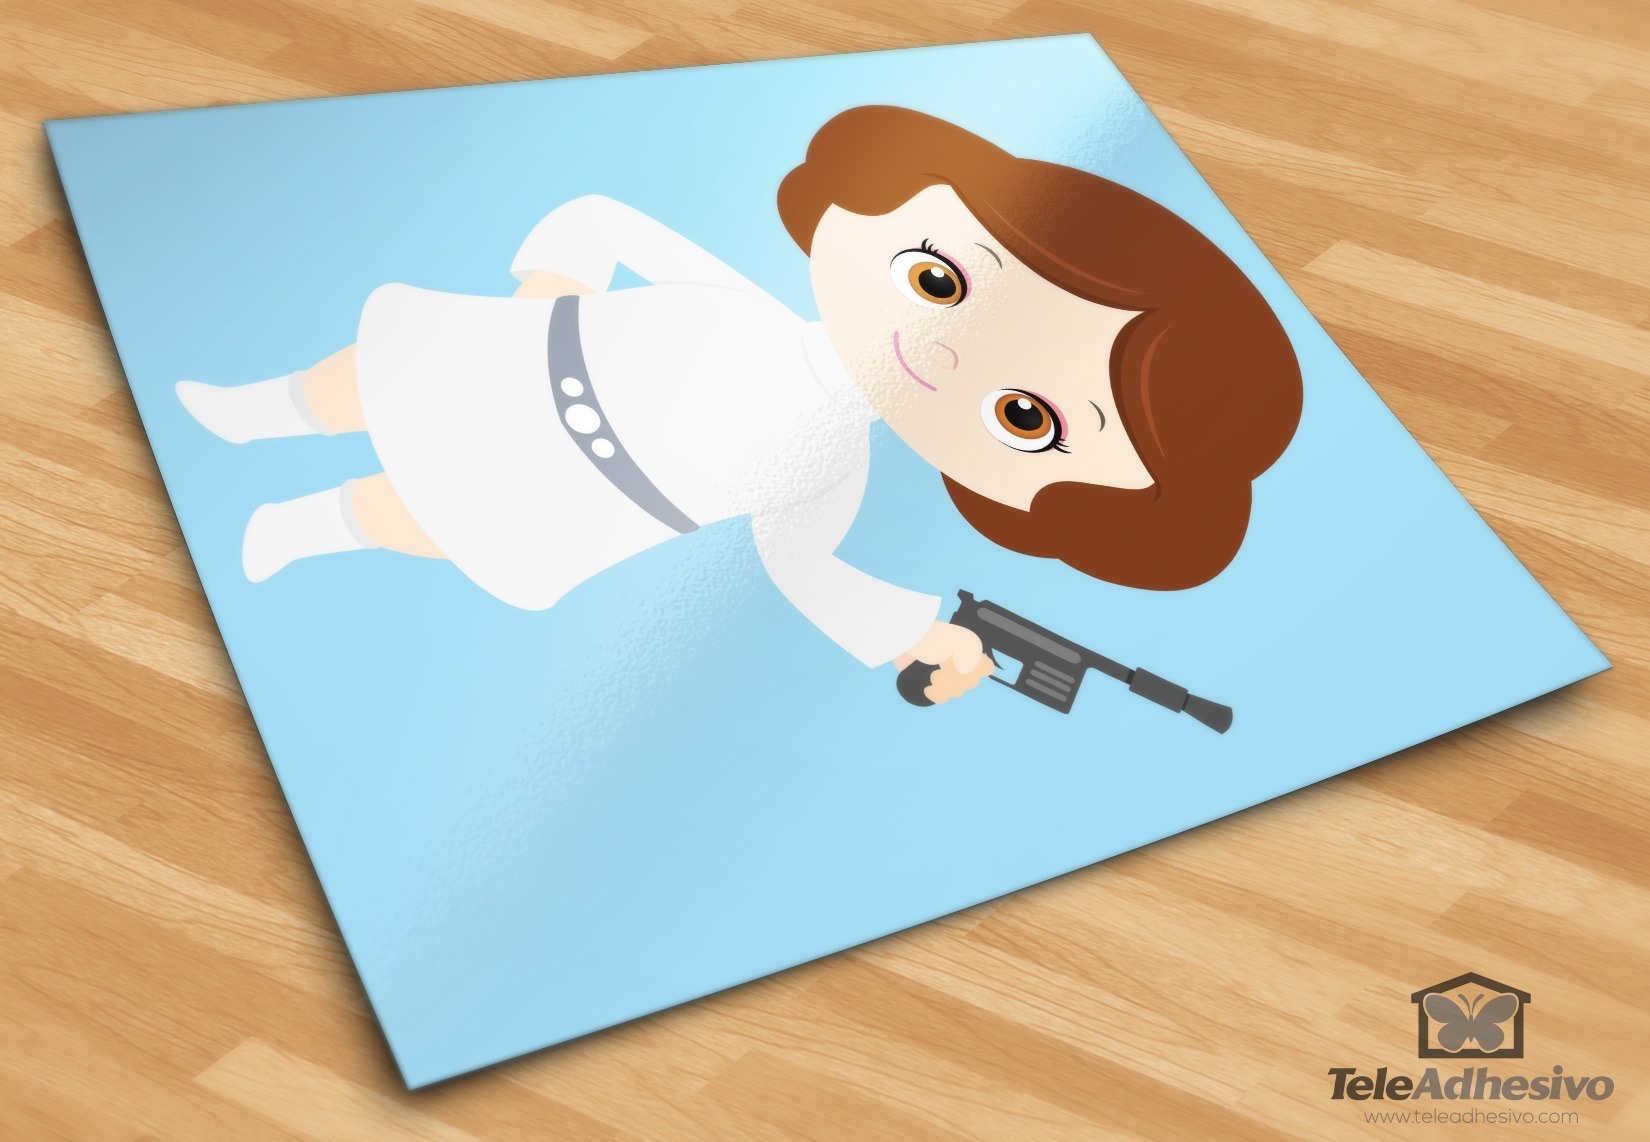 Stickers for Kids: Princess Leia